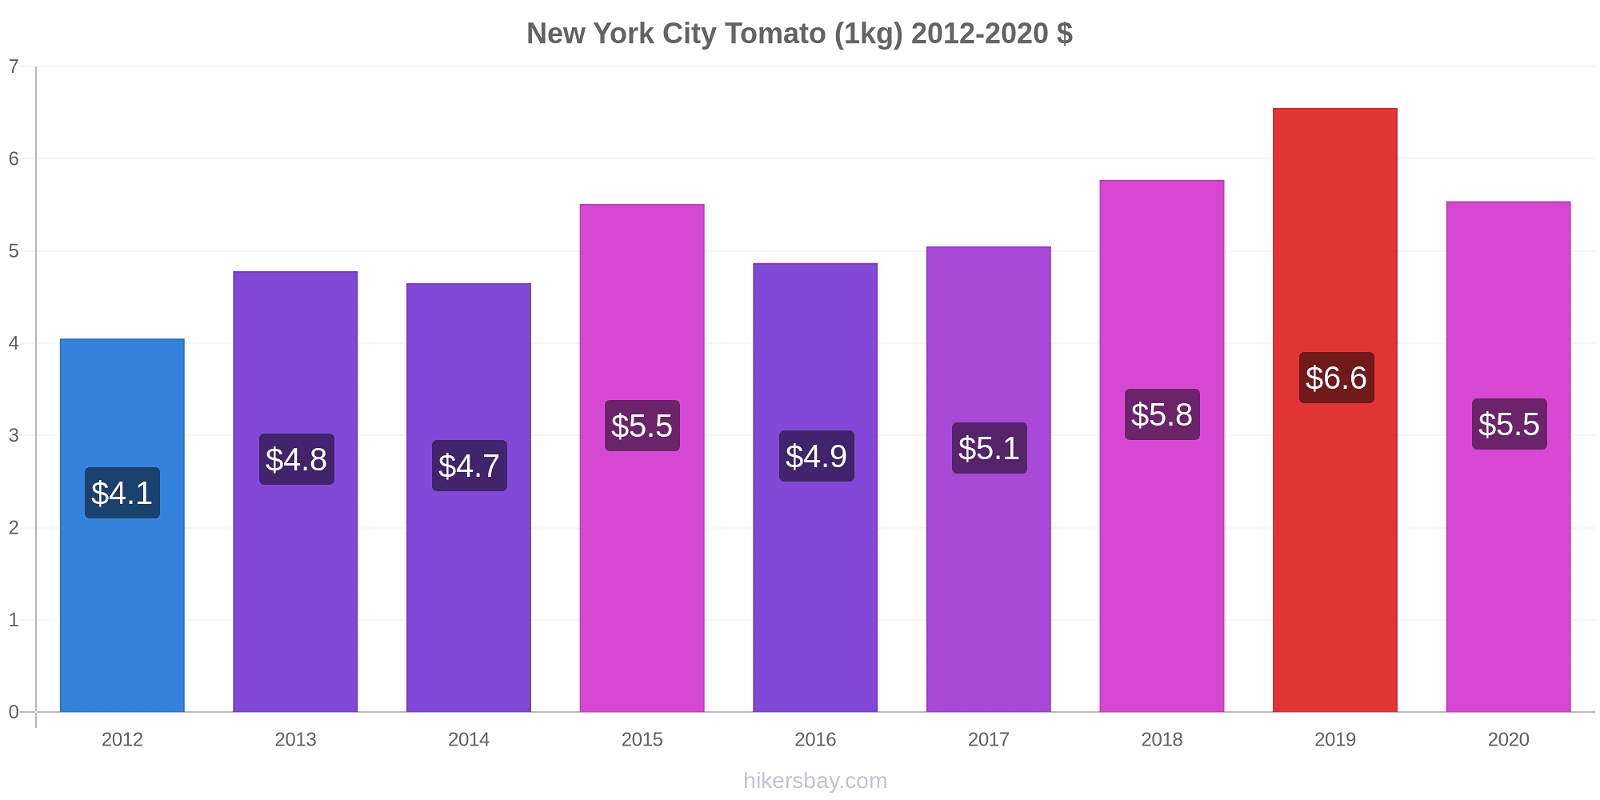 New York City price changes Tomato (1kg) hikersbay.com